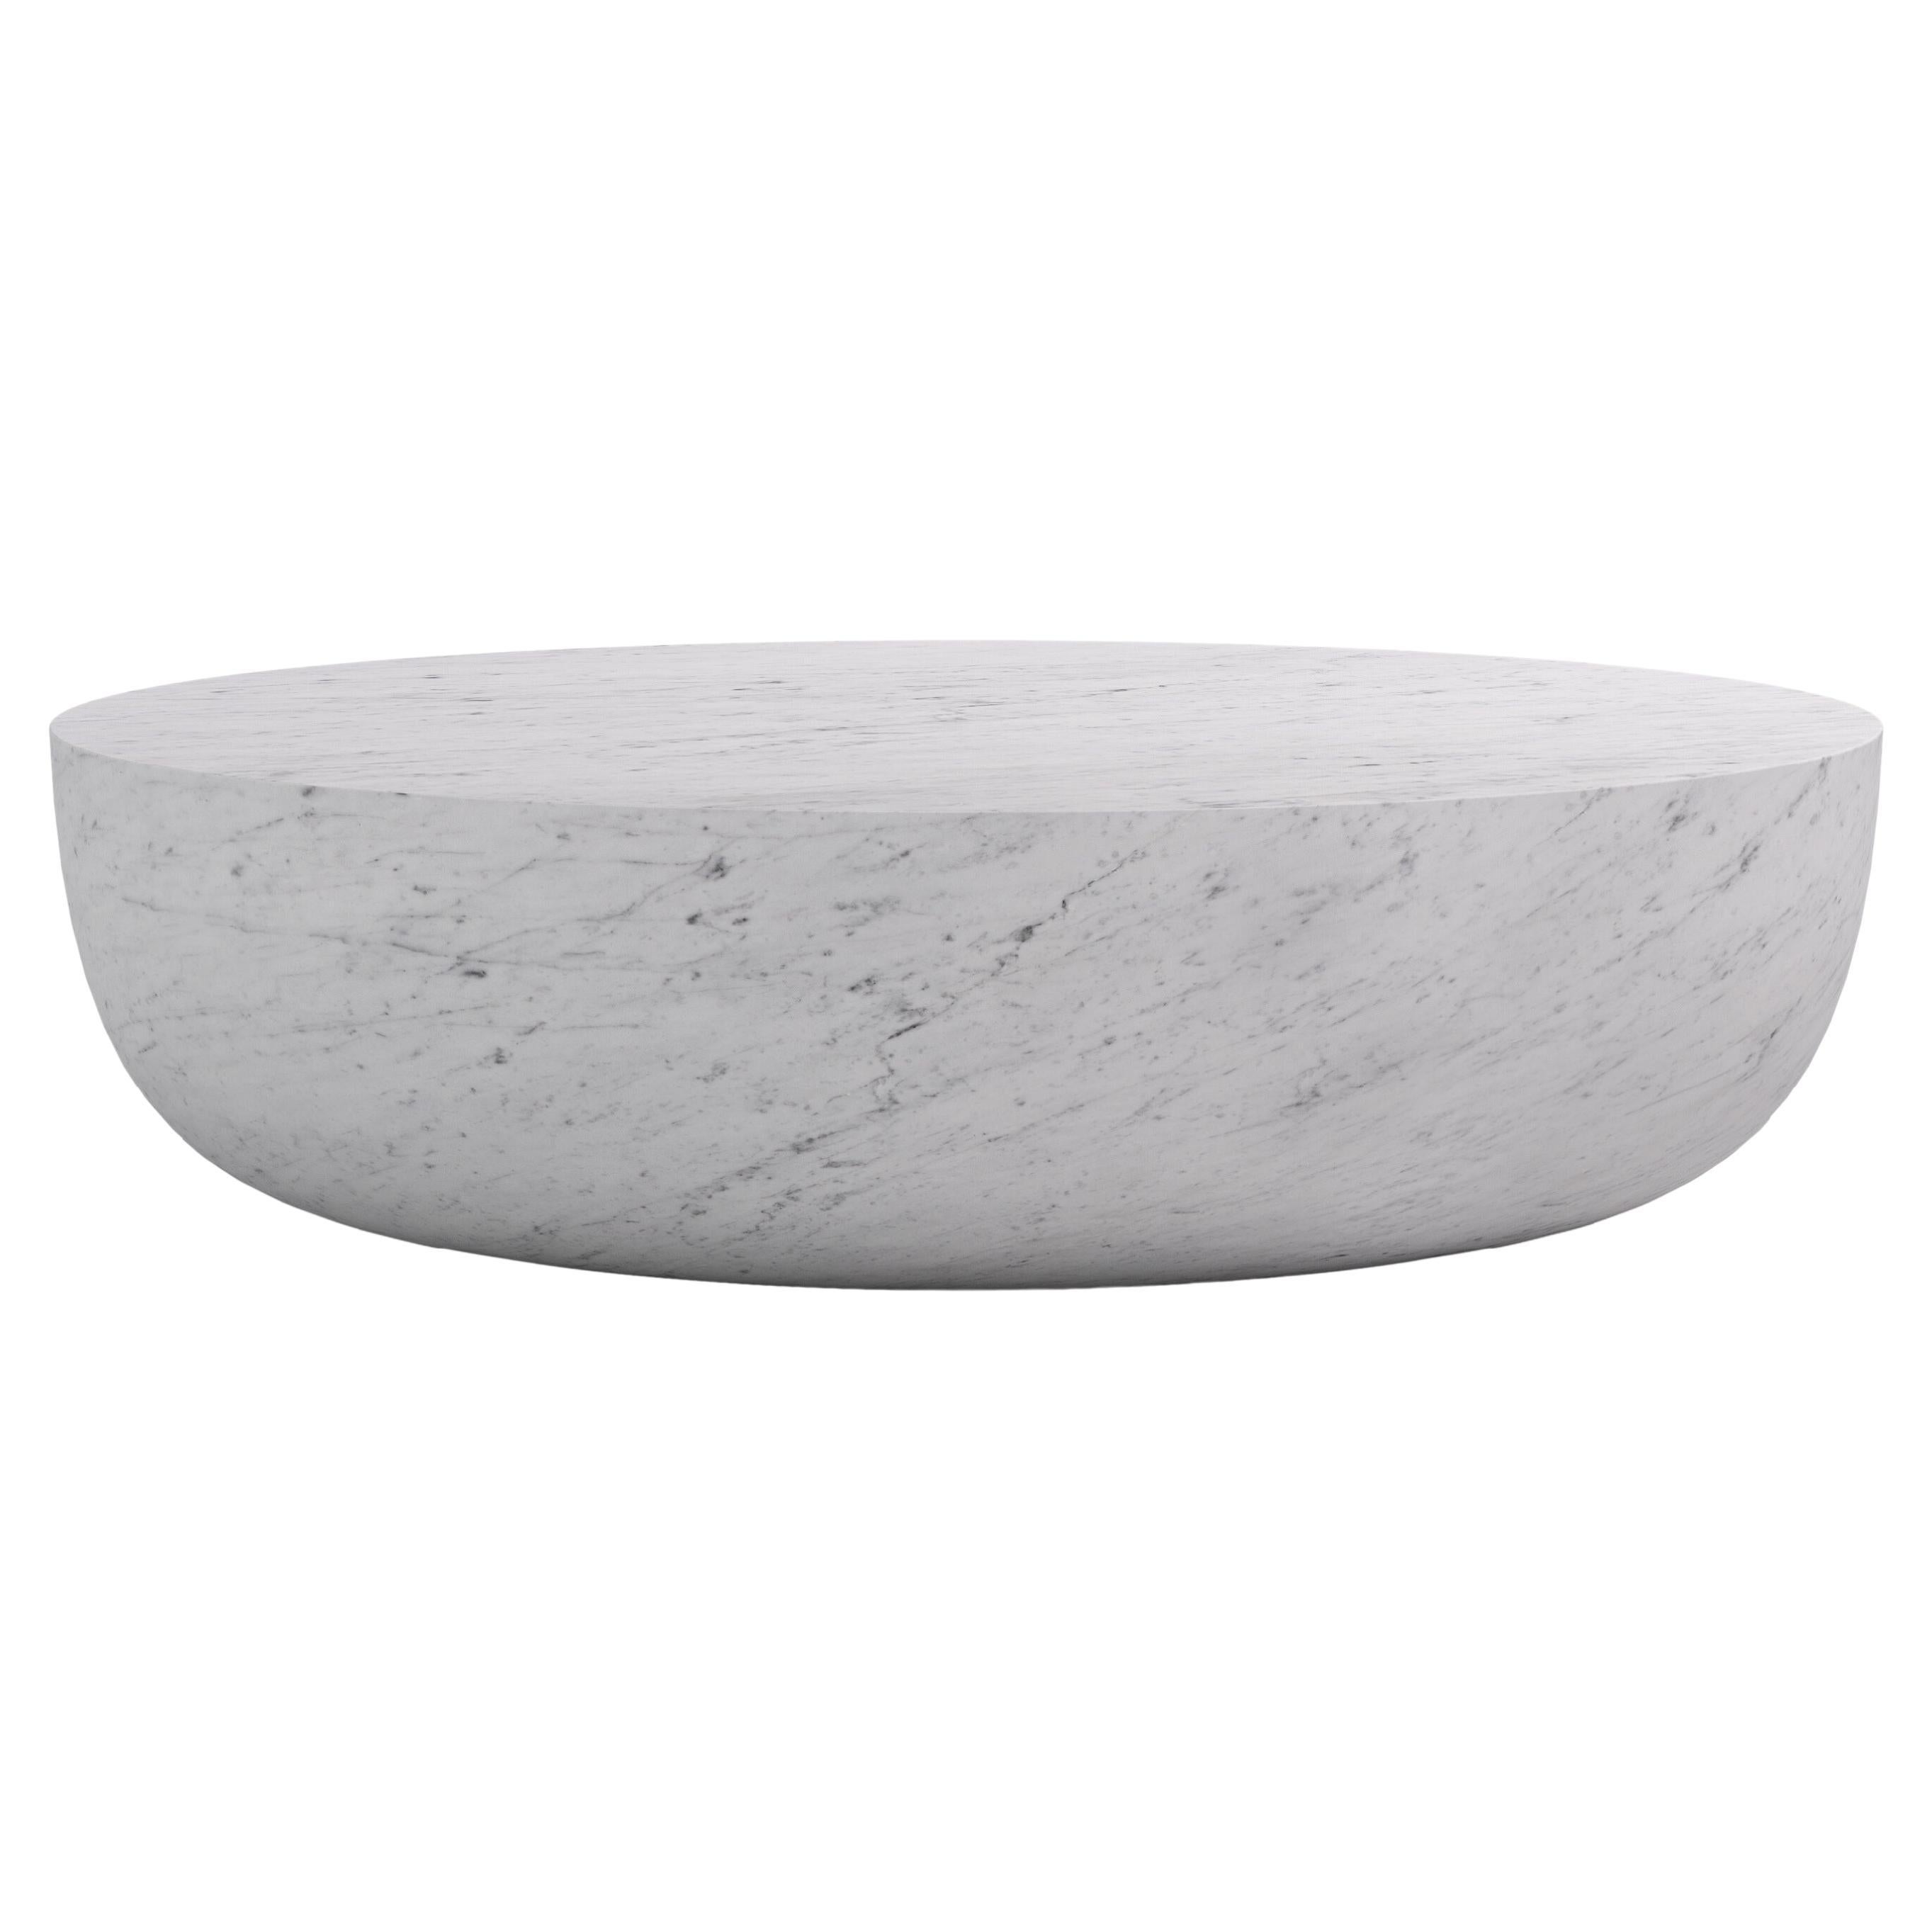 FORM(LA) Sfera Oval Coffee Table 72”L x 48”W x 16”H Carrara Bianco Marble